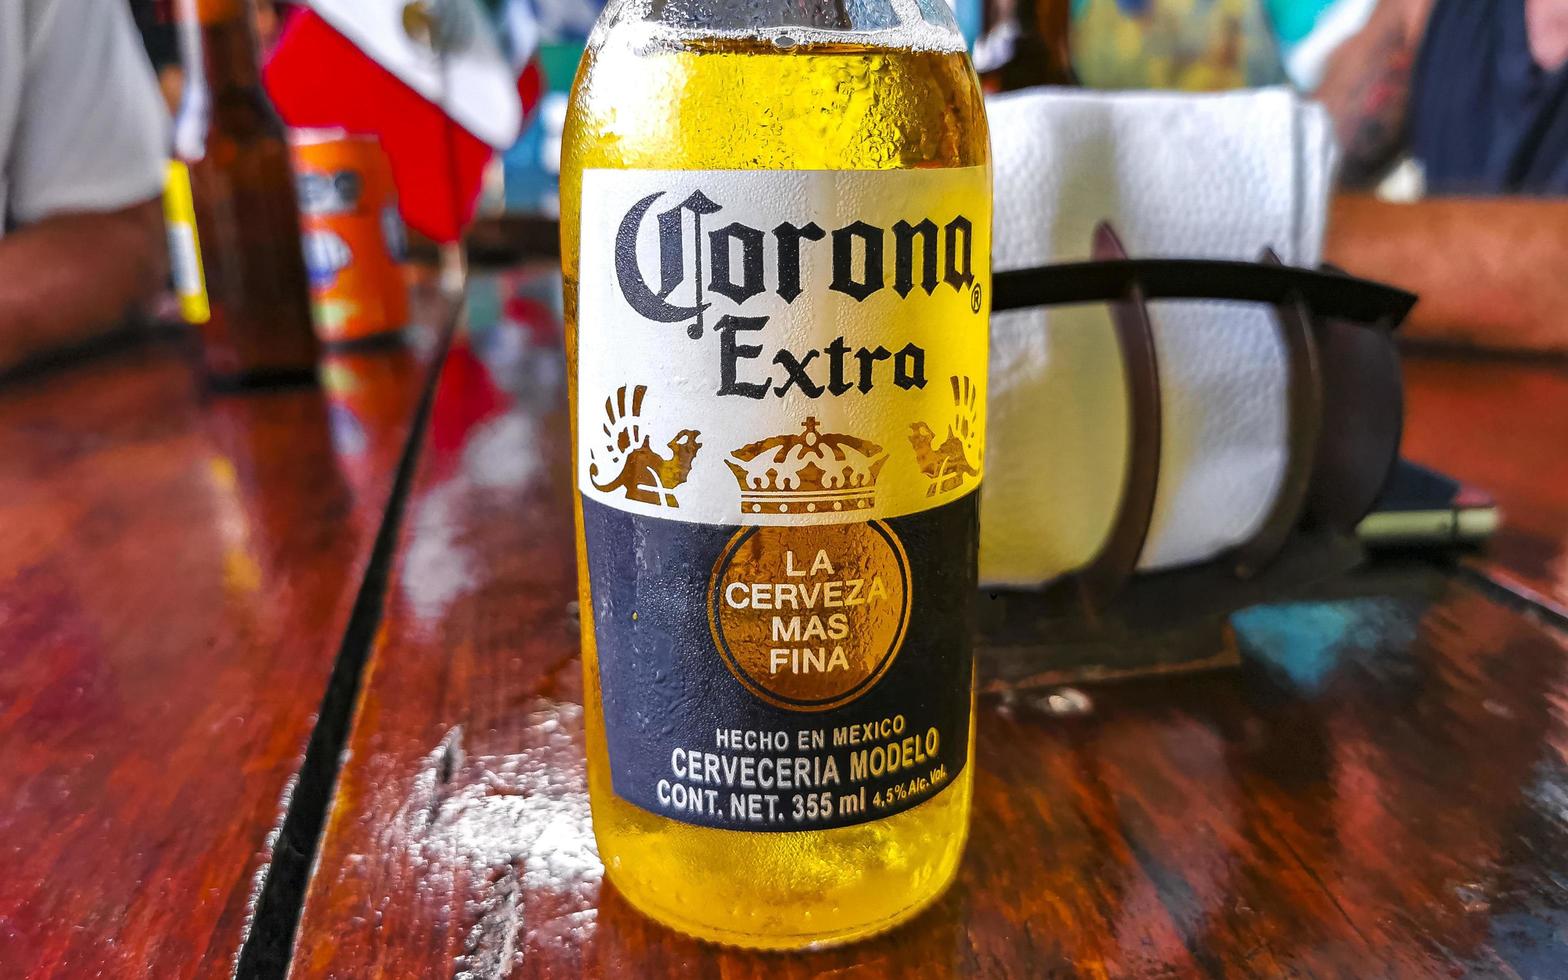 playa del carmen quintana roo Mexico 2022 corona bier fles in restaurant bar in playa del carmen Mexico. foto